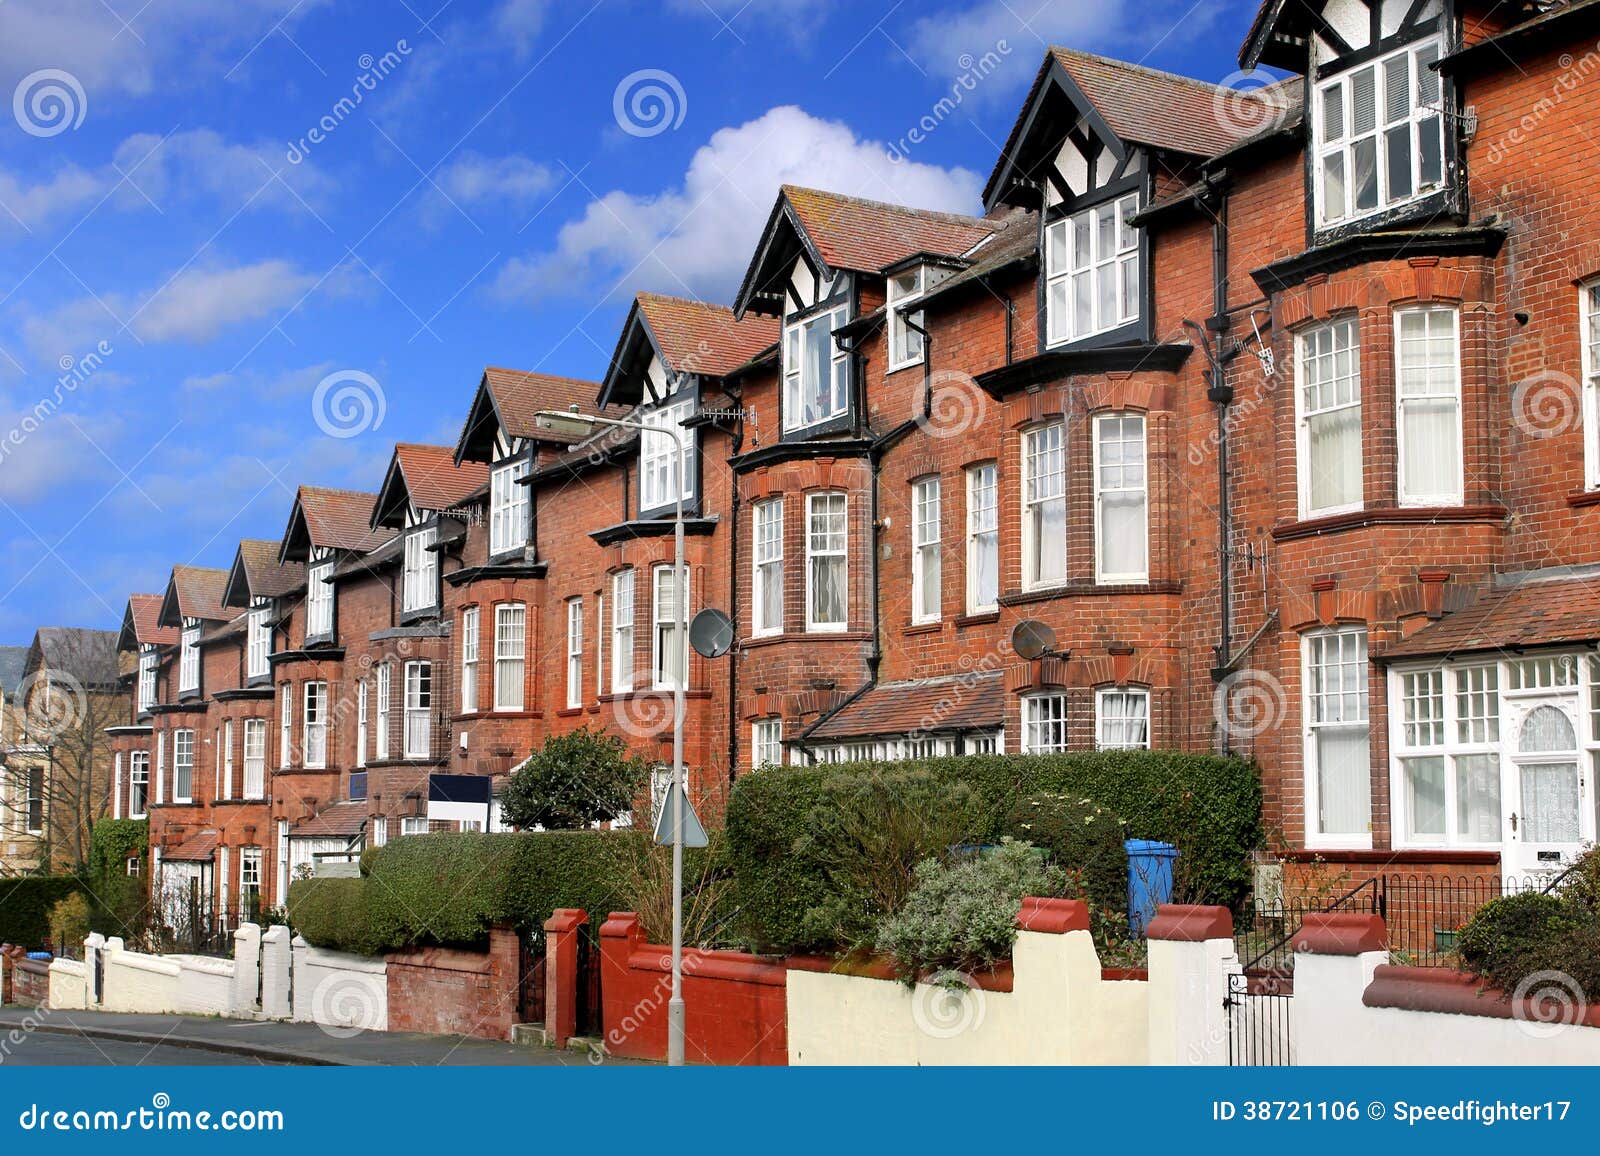 street of terraced houses